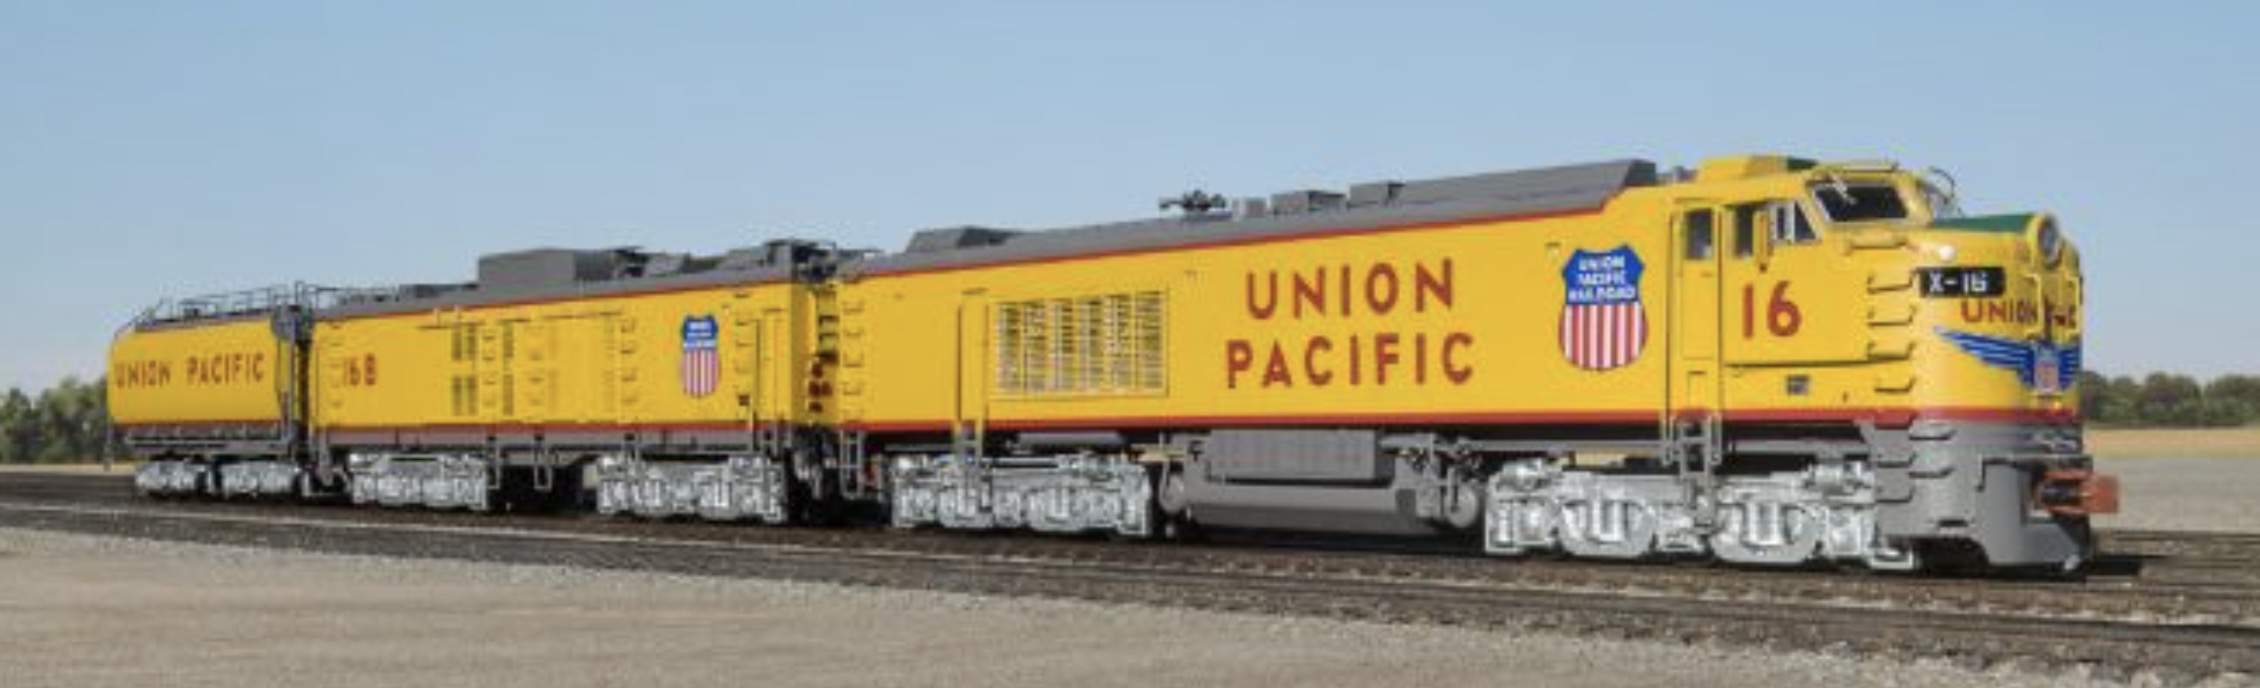 N Scale - ScaleTrains - SXT33532 - Locomotive, Gas Turbine-Electric - Union Pacific - 16